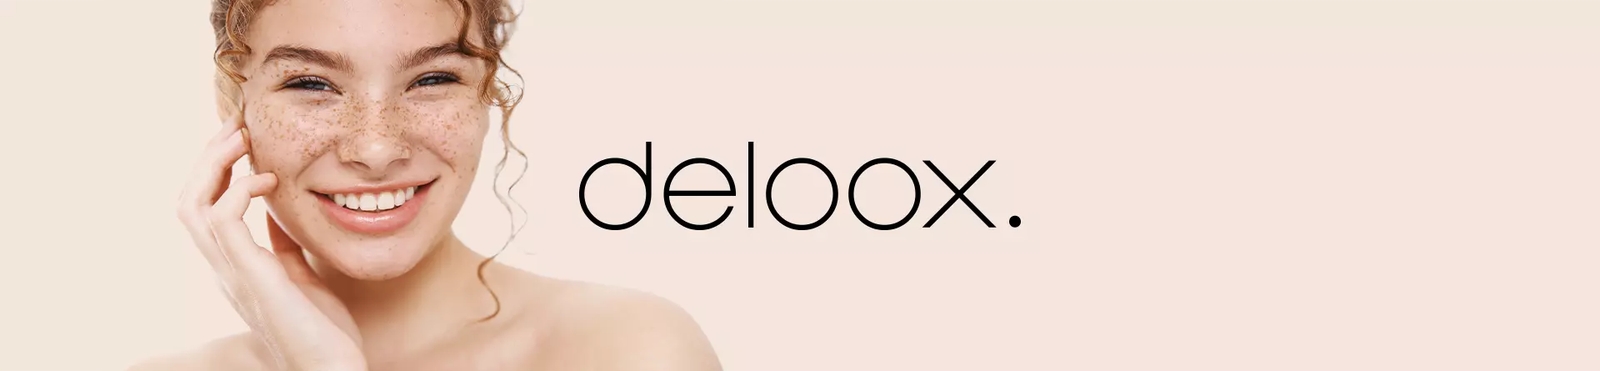 Deloox banner